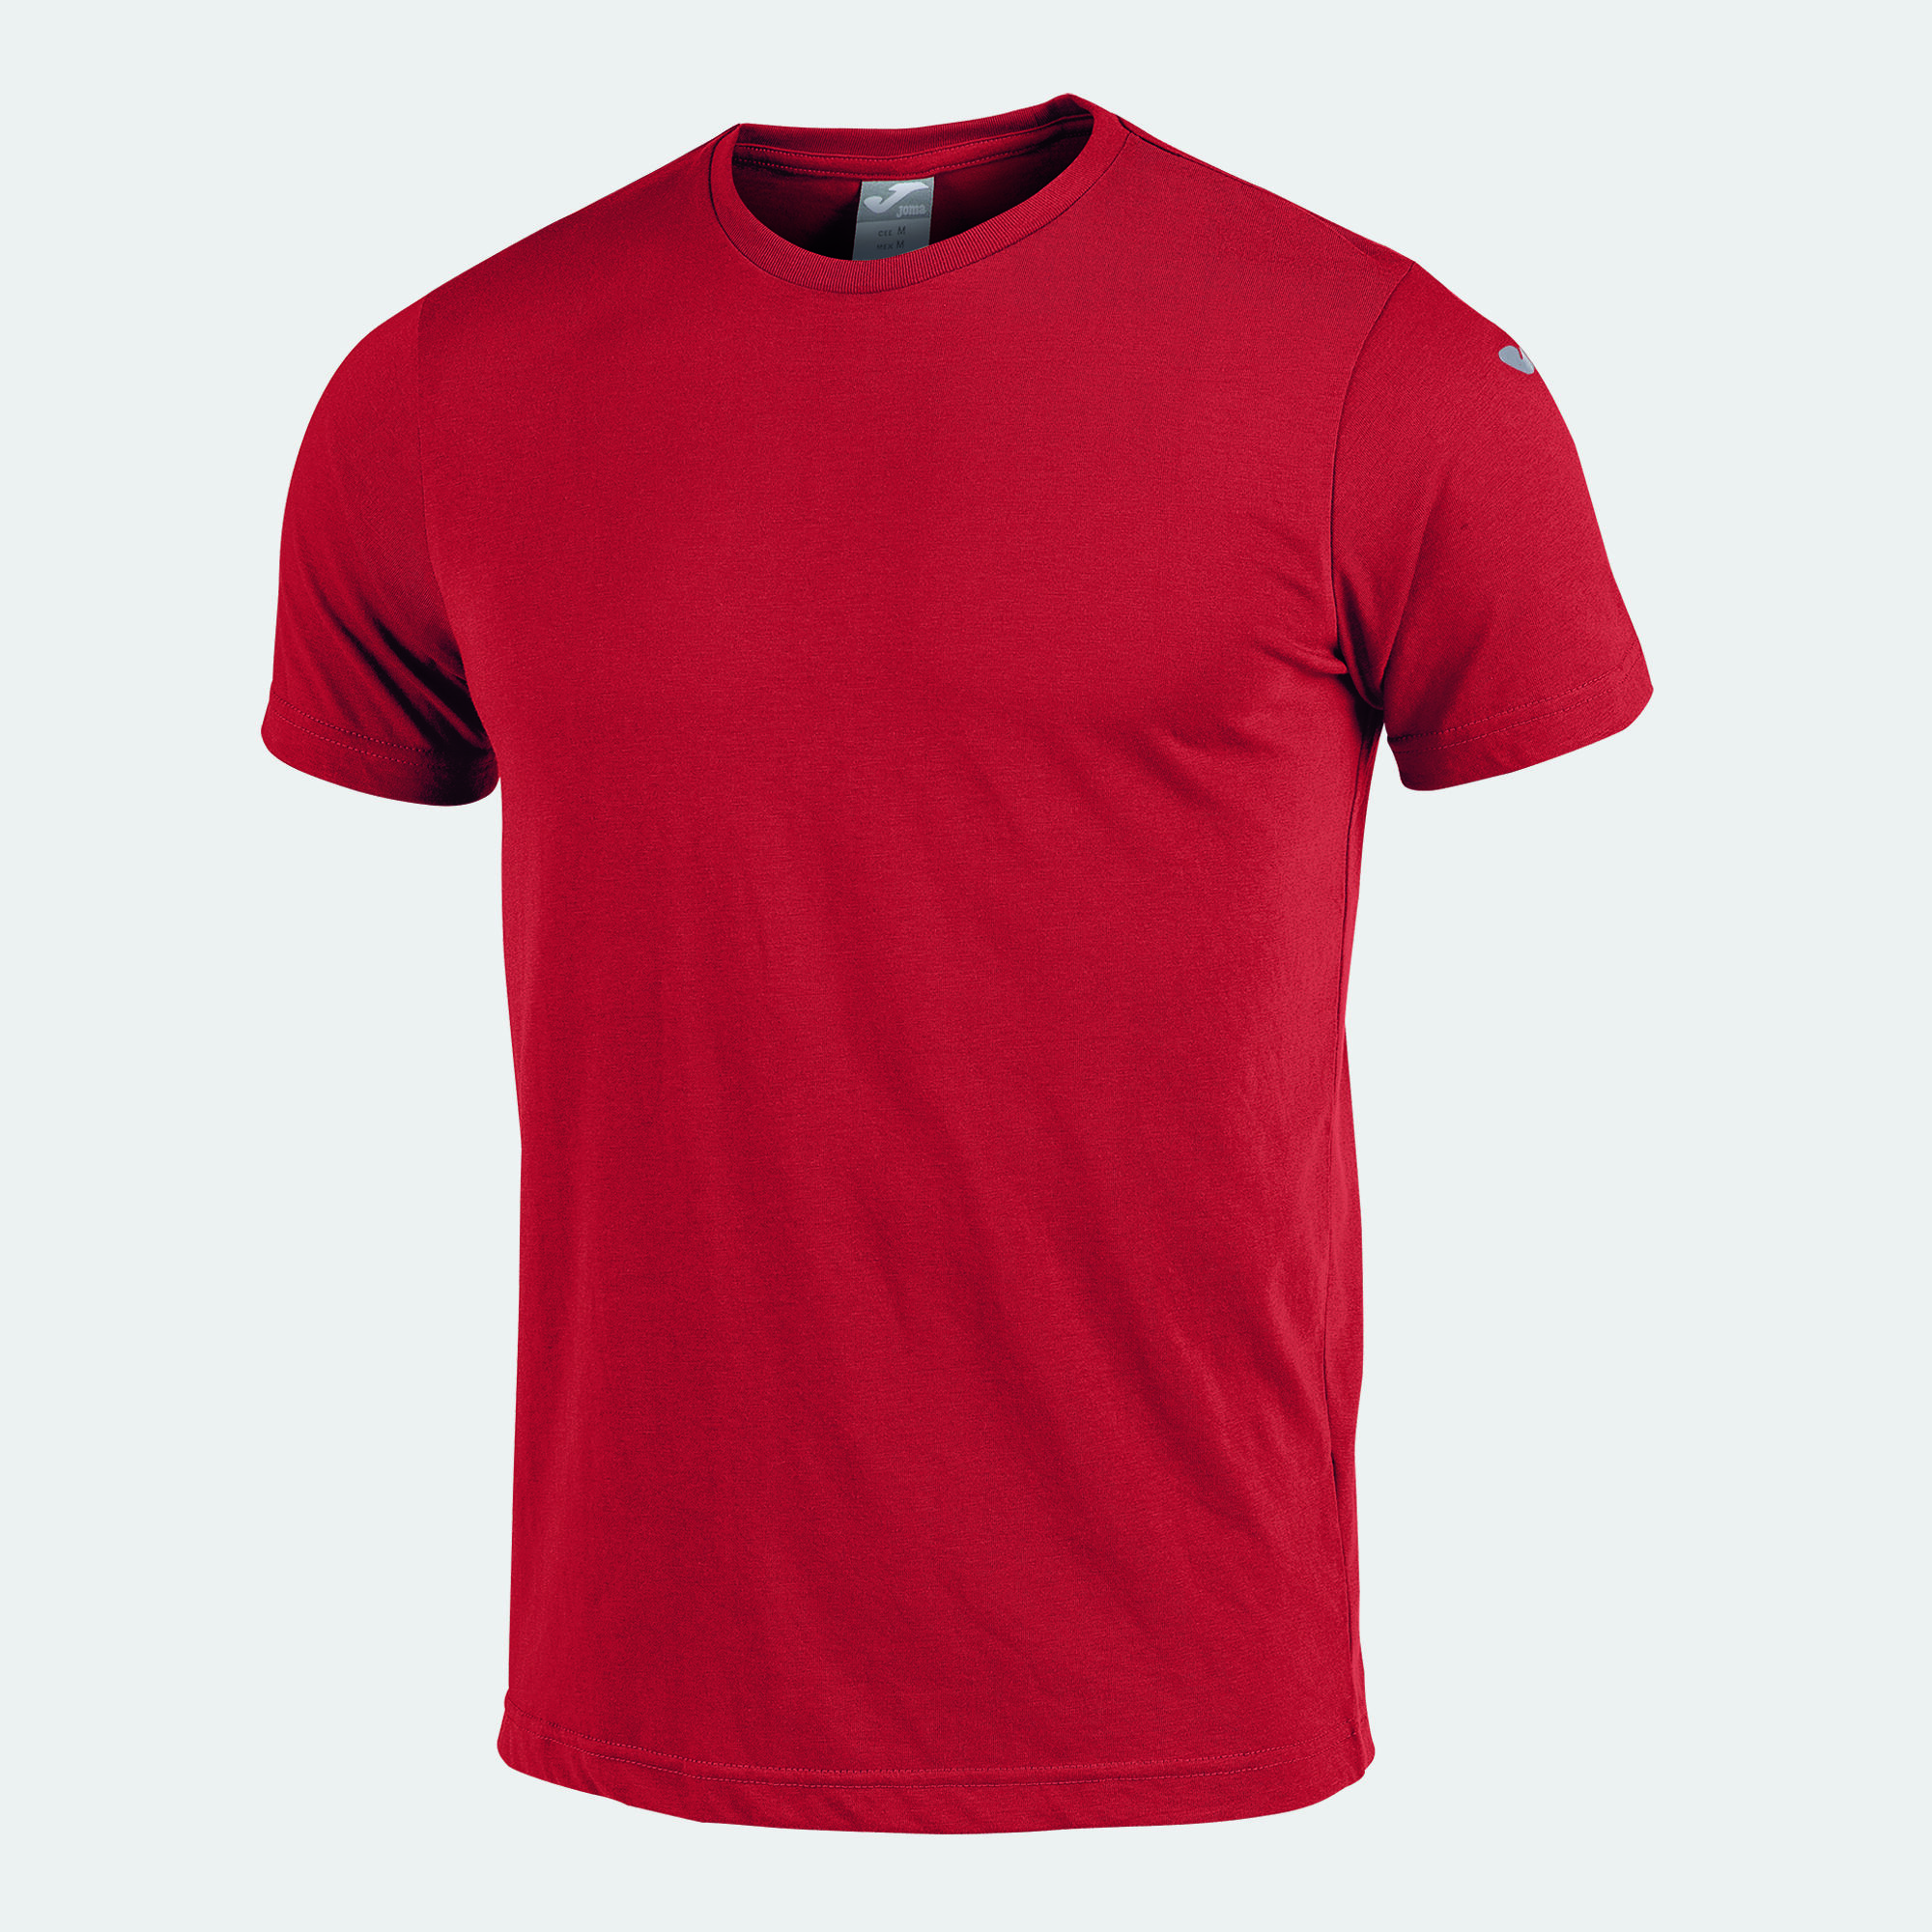 Camiseta manga corta hombre Nimes rojo